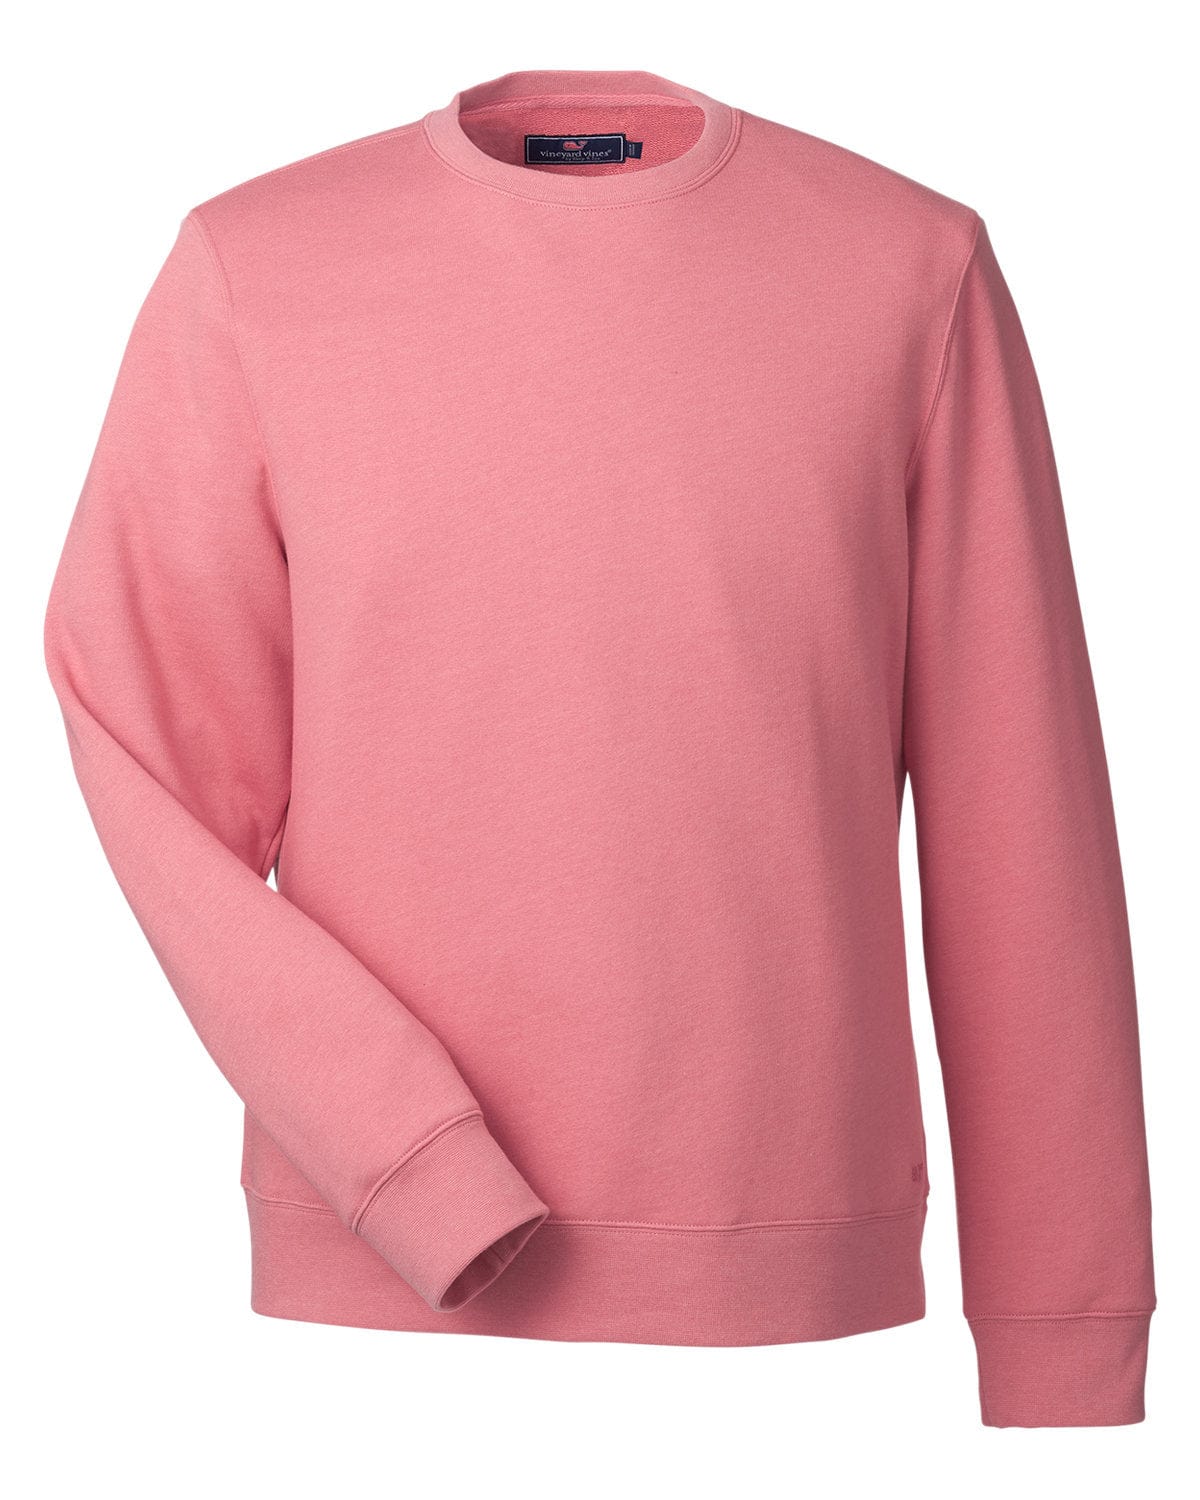 Vineyard Vines Sweatshirts S / Jetty Red Vineyard Vines - Men's Garment-Dyed Crewneck